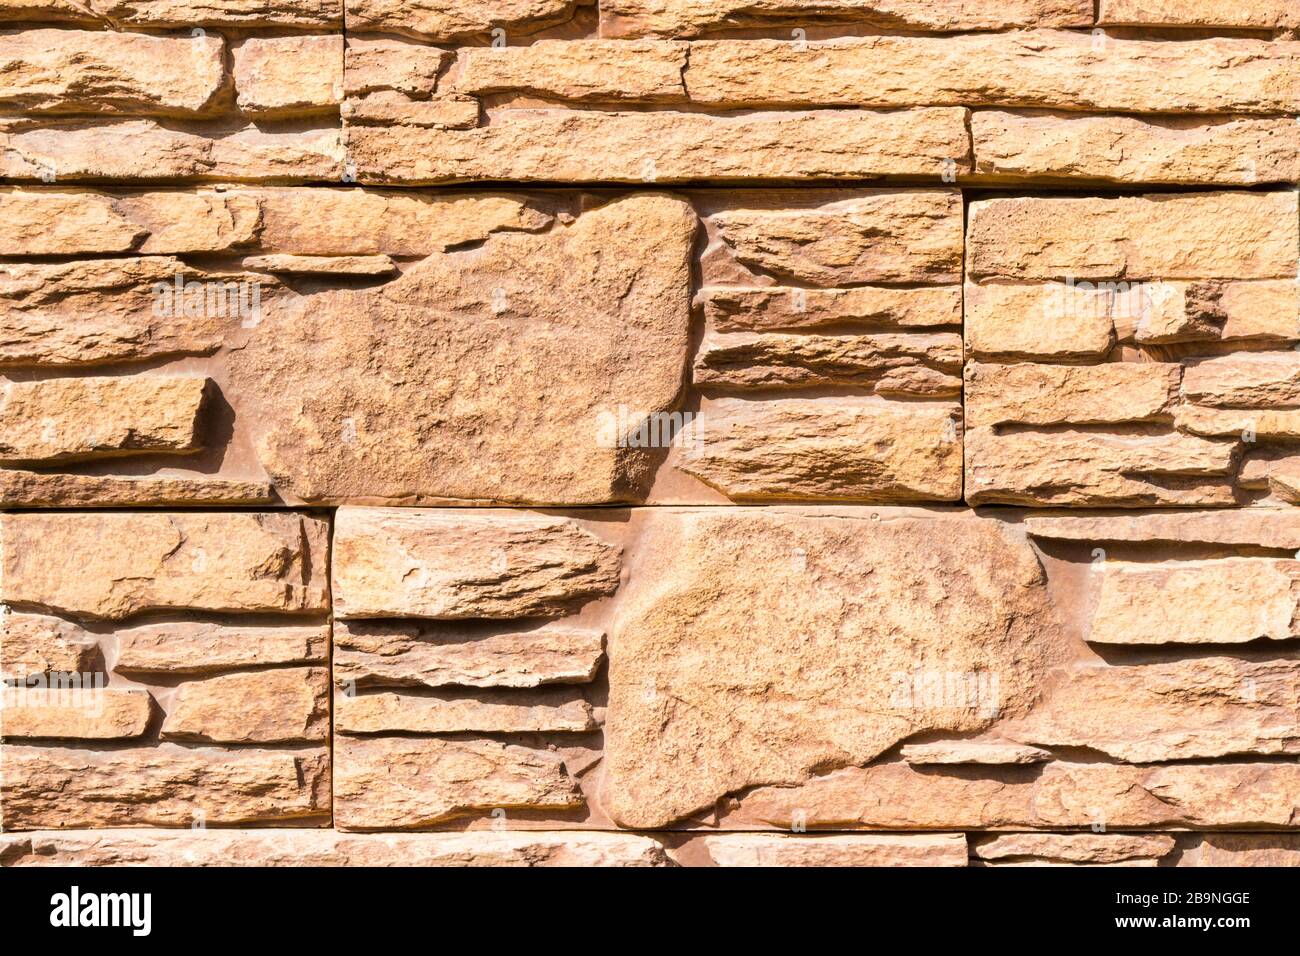 https://c8.alamy.com/compes/2b9ngge/paneles-de-piedra-falsa-marron-pared-patron-de-fondo-2b9ngge.jpg